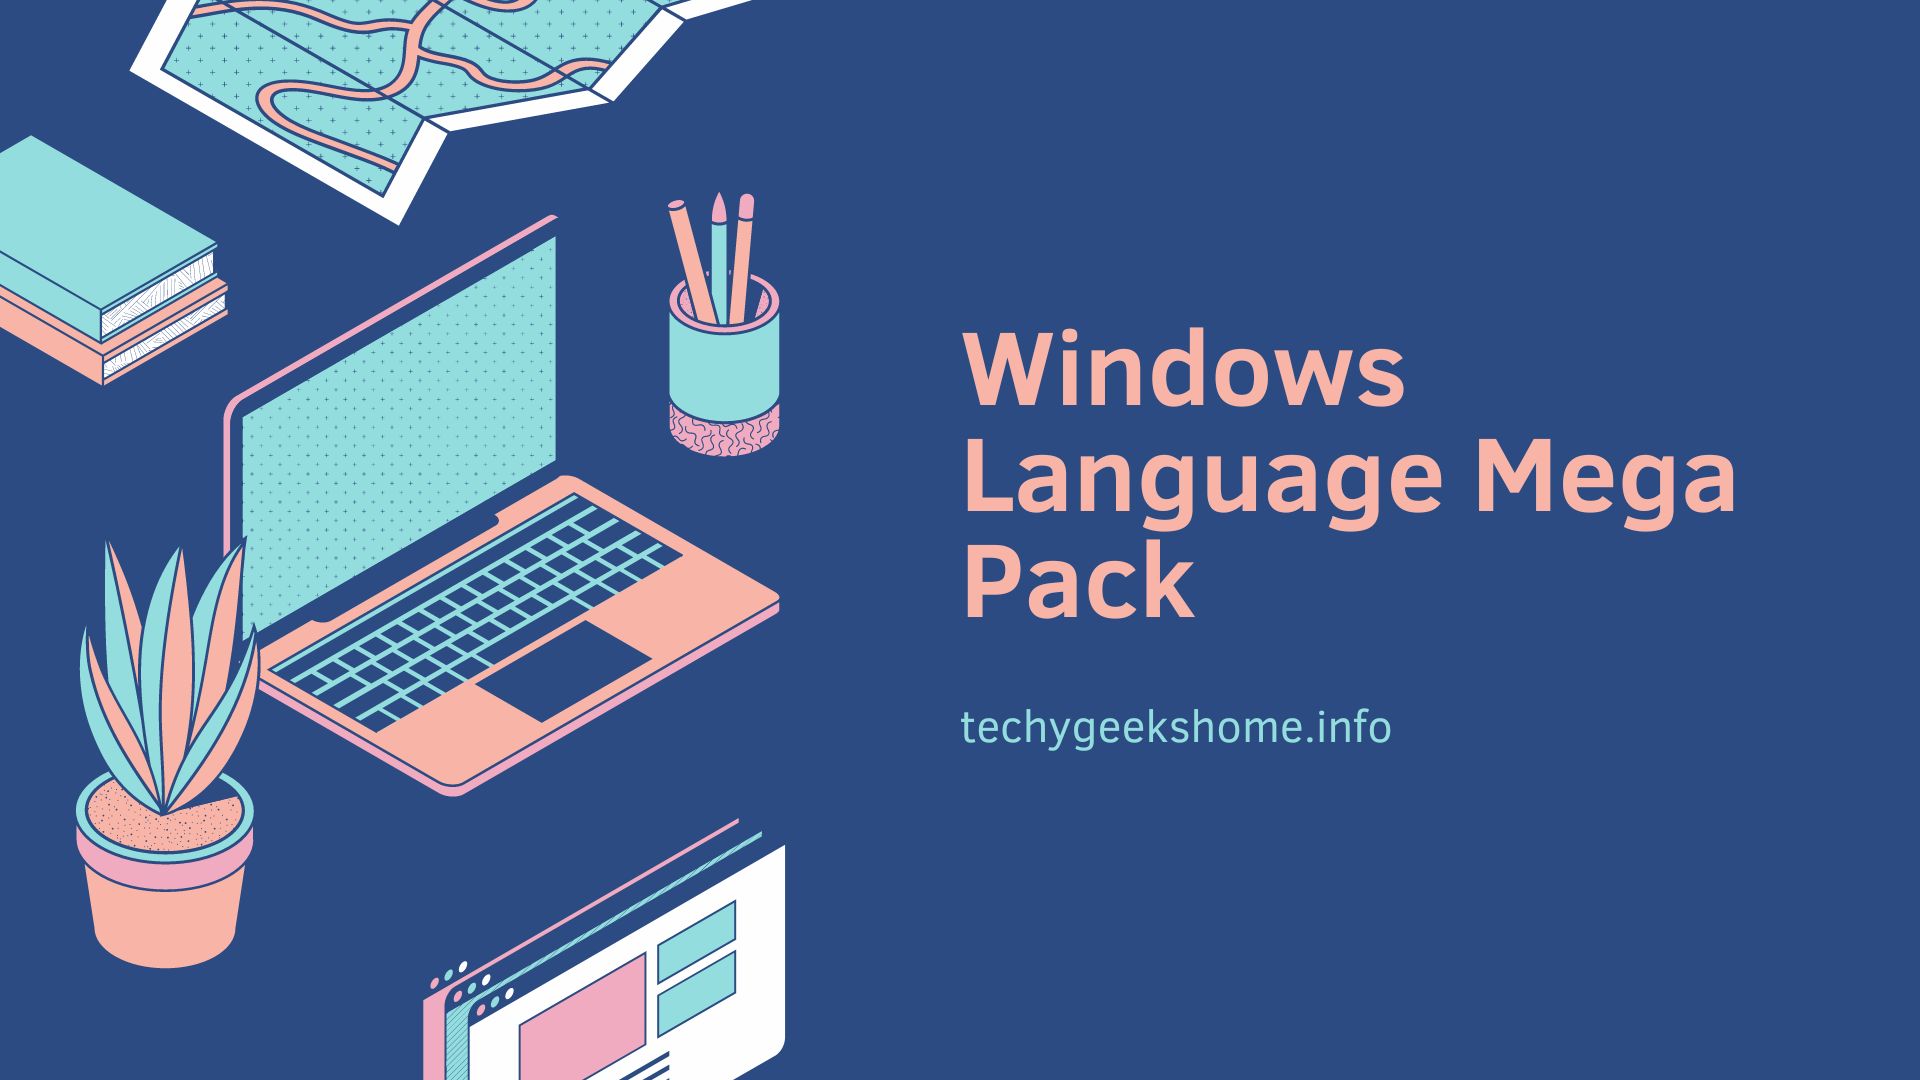 Windows Language Mega Pack